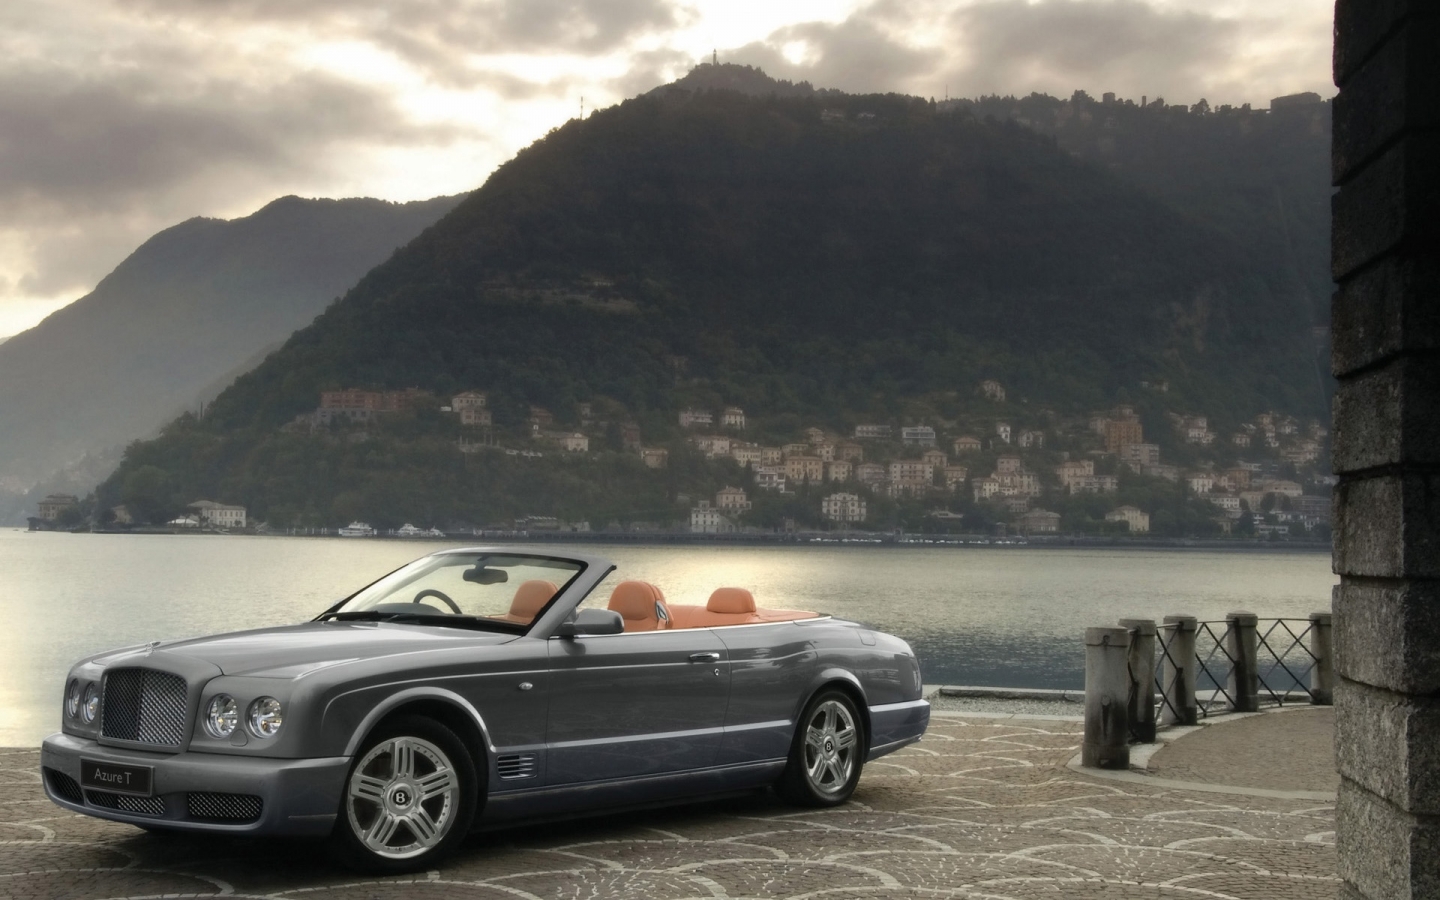 Bentley Azure T Venusian Grey 2009 for 1440 x 900 widescreen resolution